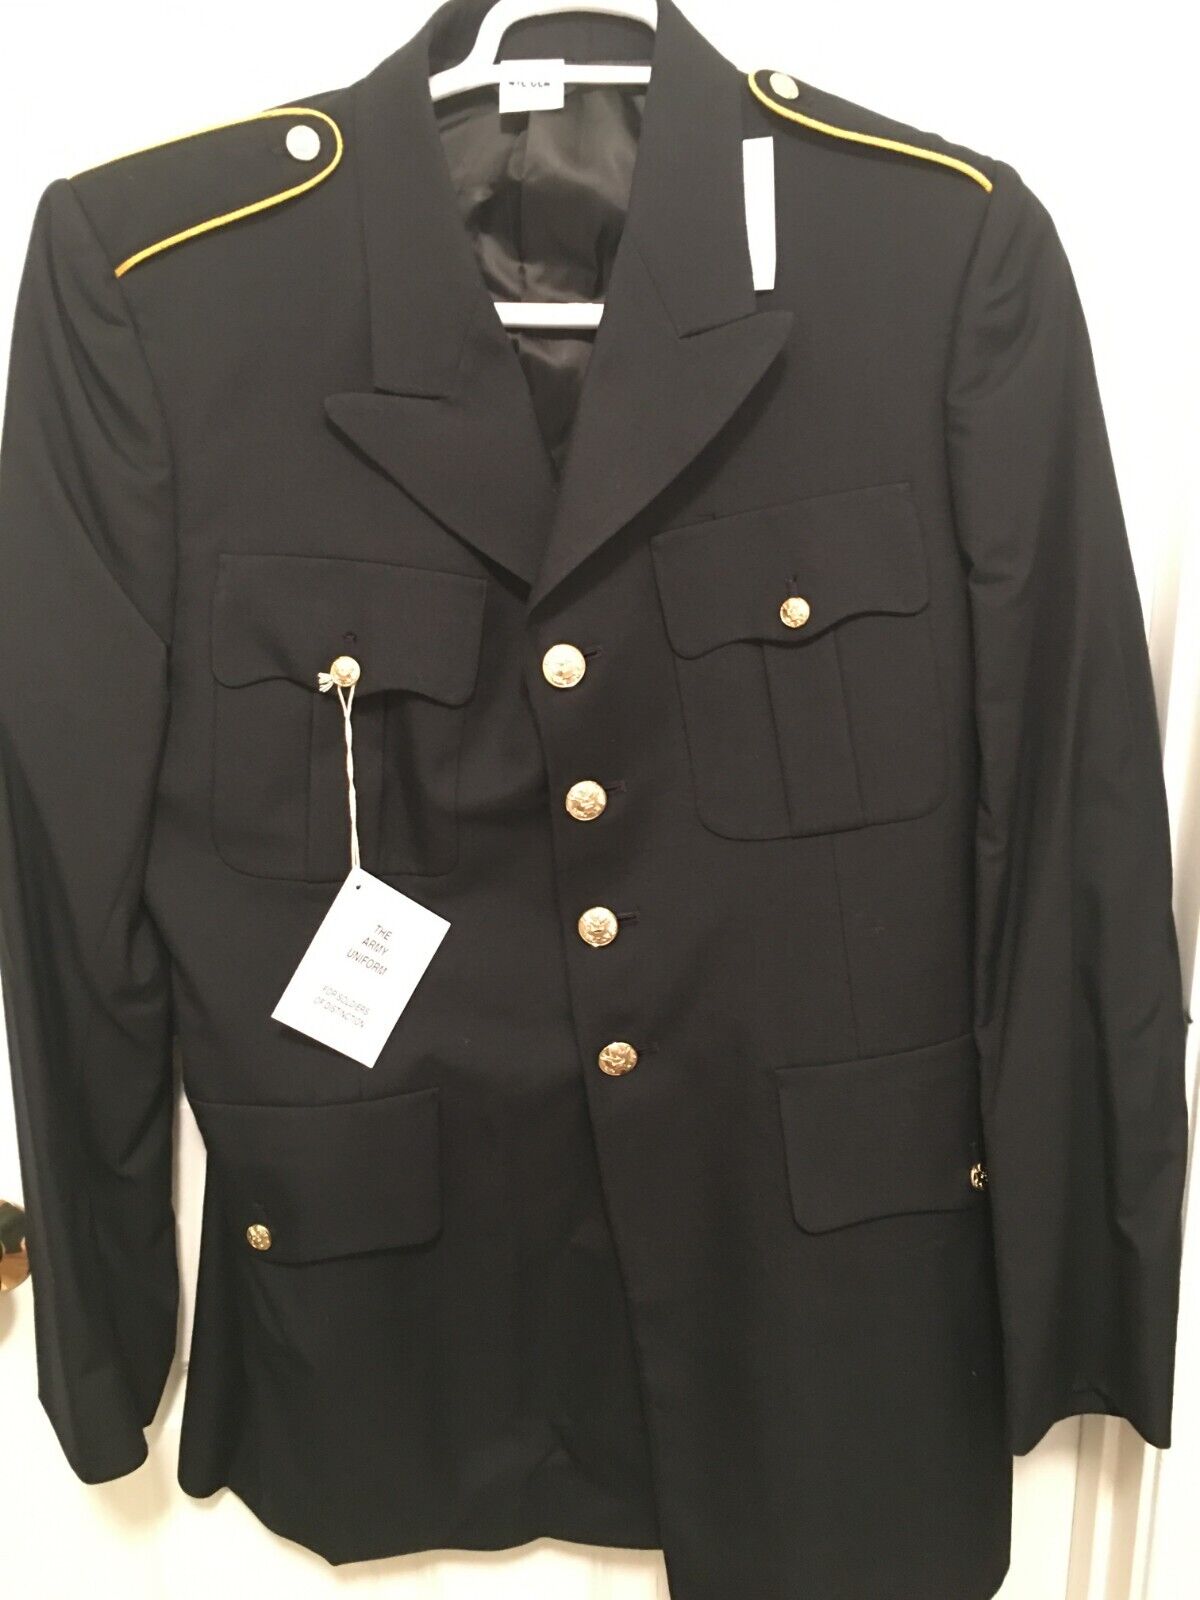 US Army Men’s Military Service Dress Blue Uniform Jacket Coat Size 41L ASU